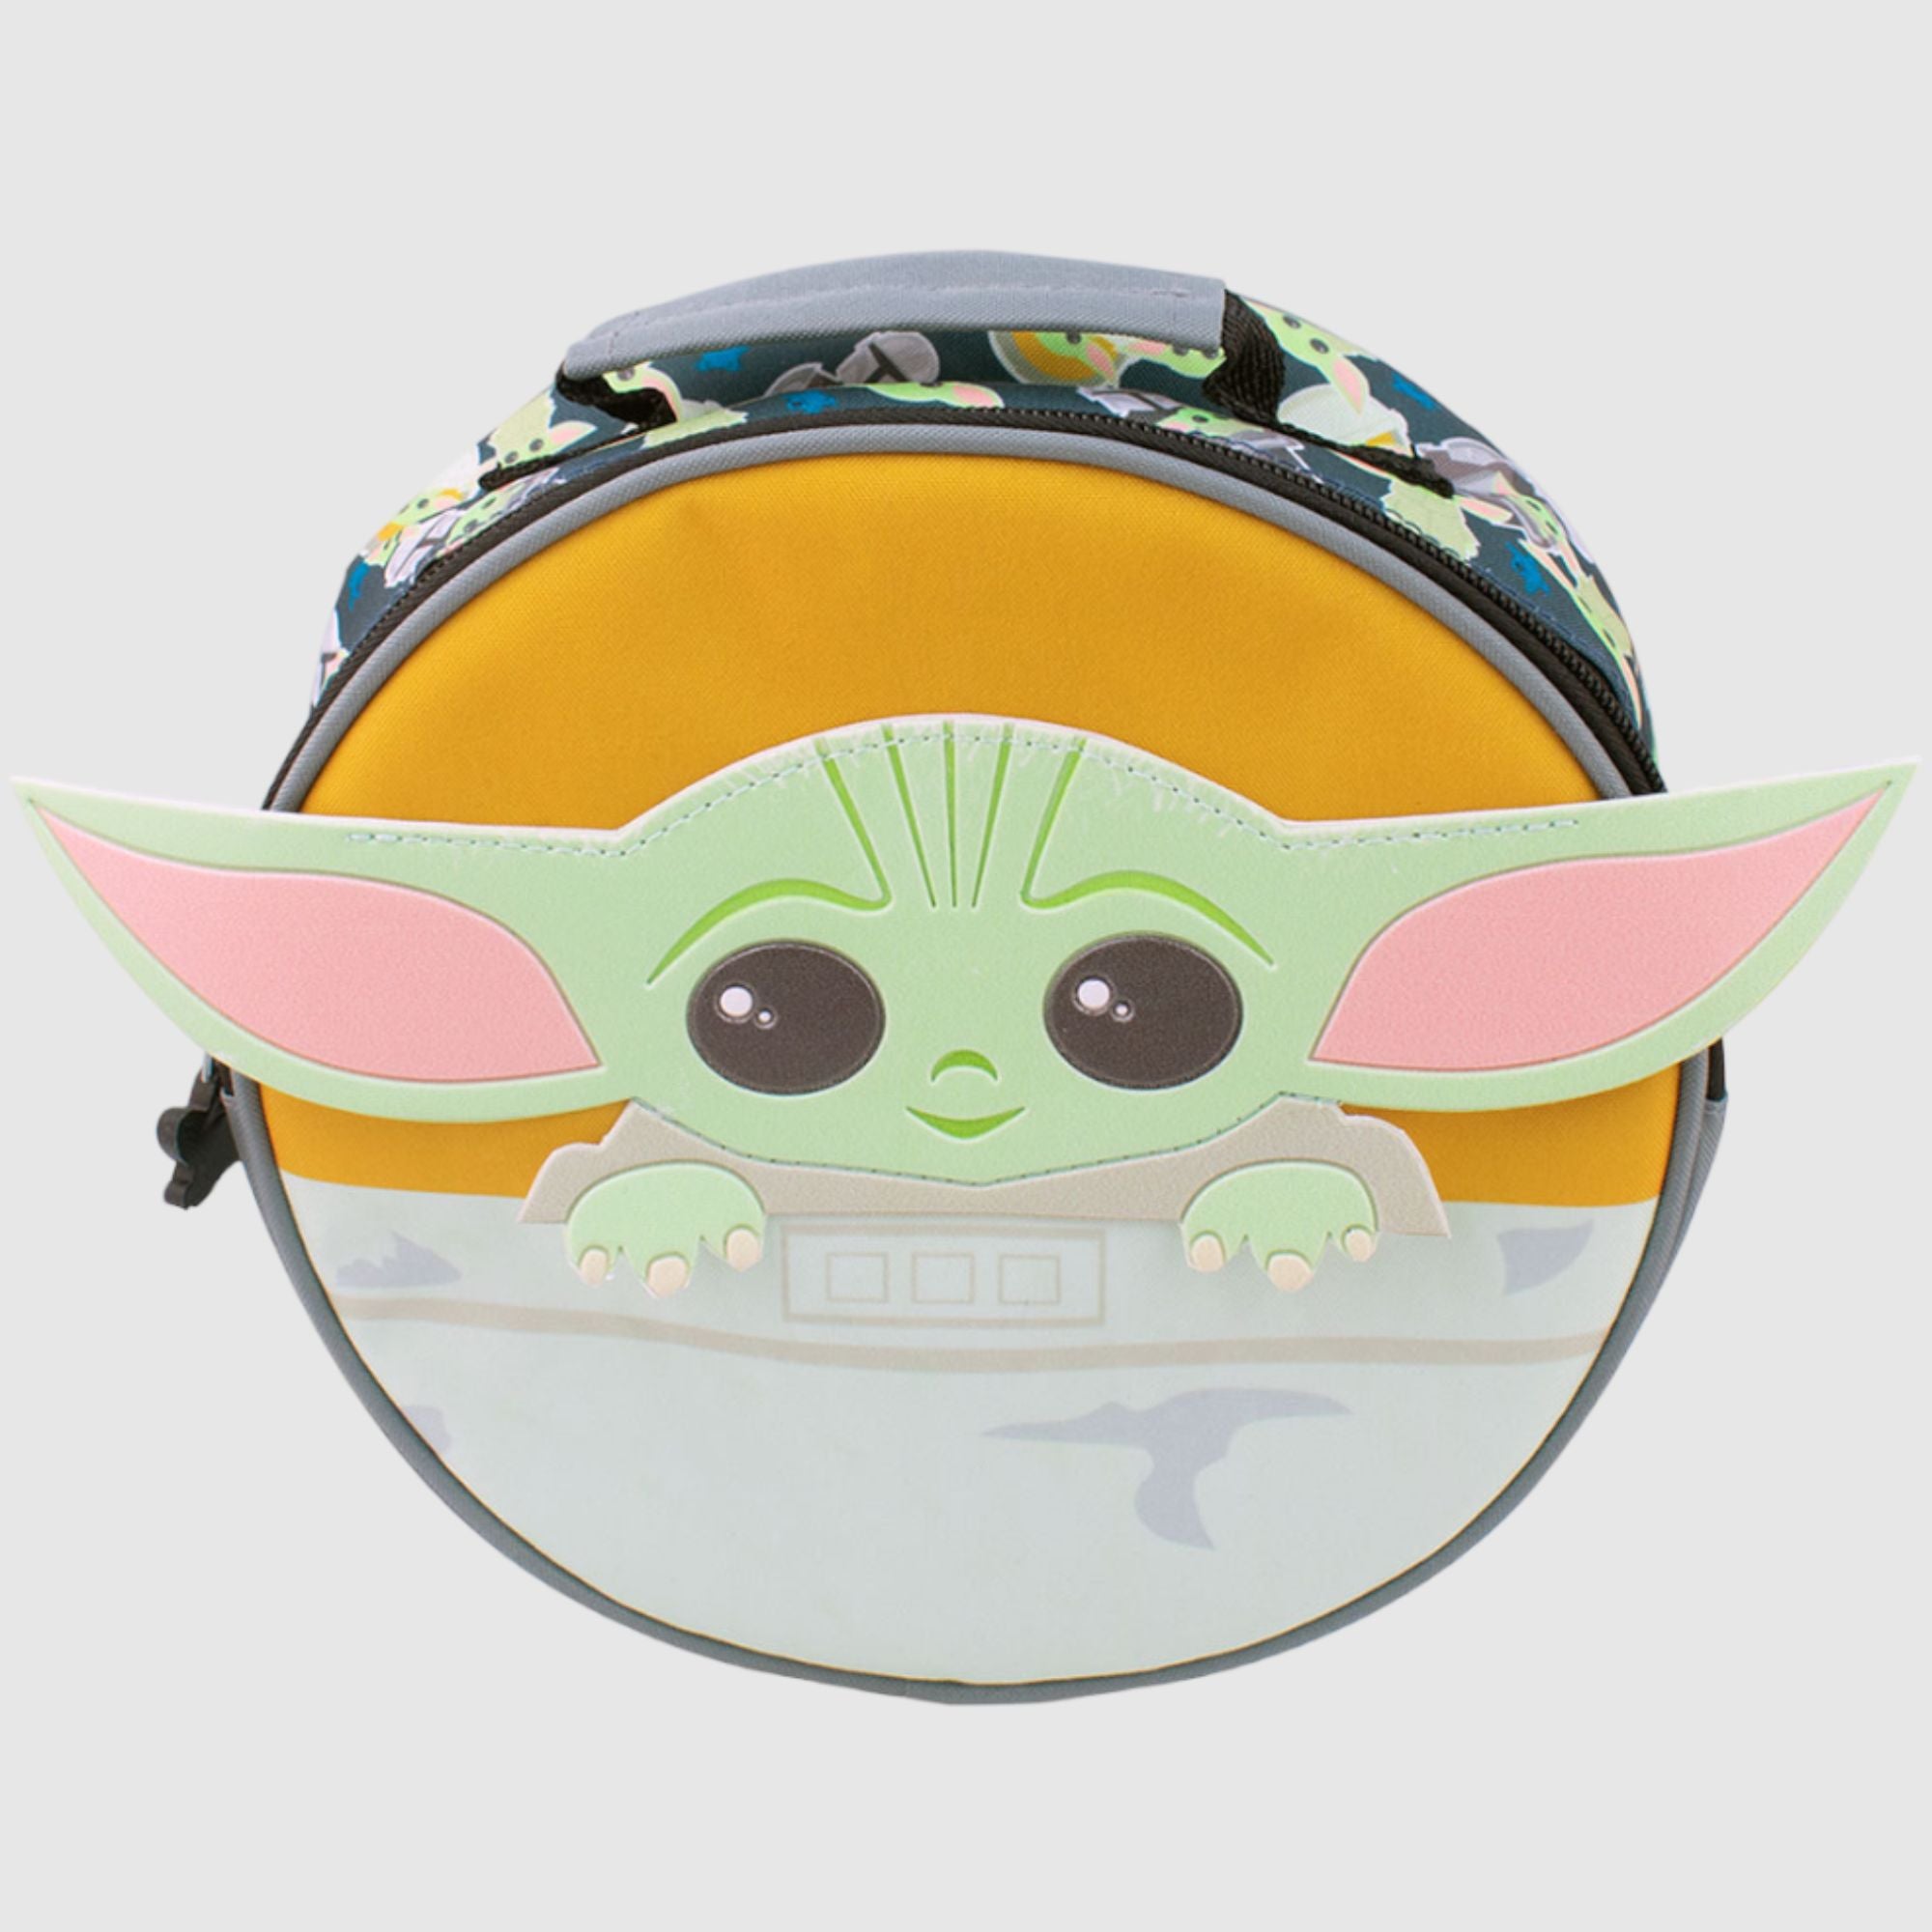 Lonchera Termica de Mano Circular con Asa Fun Kids Disney Lucas Film Star Wars Mandalorian Baby Yoda Grogu Poliester